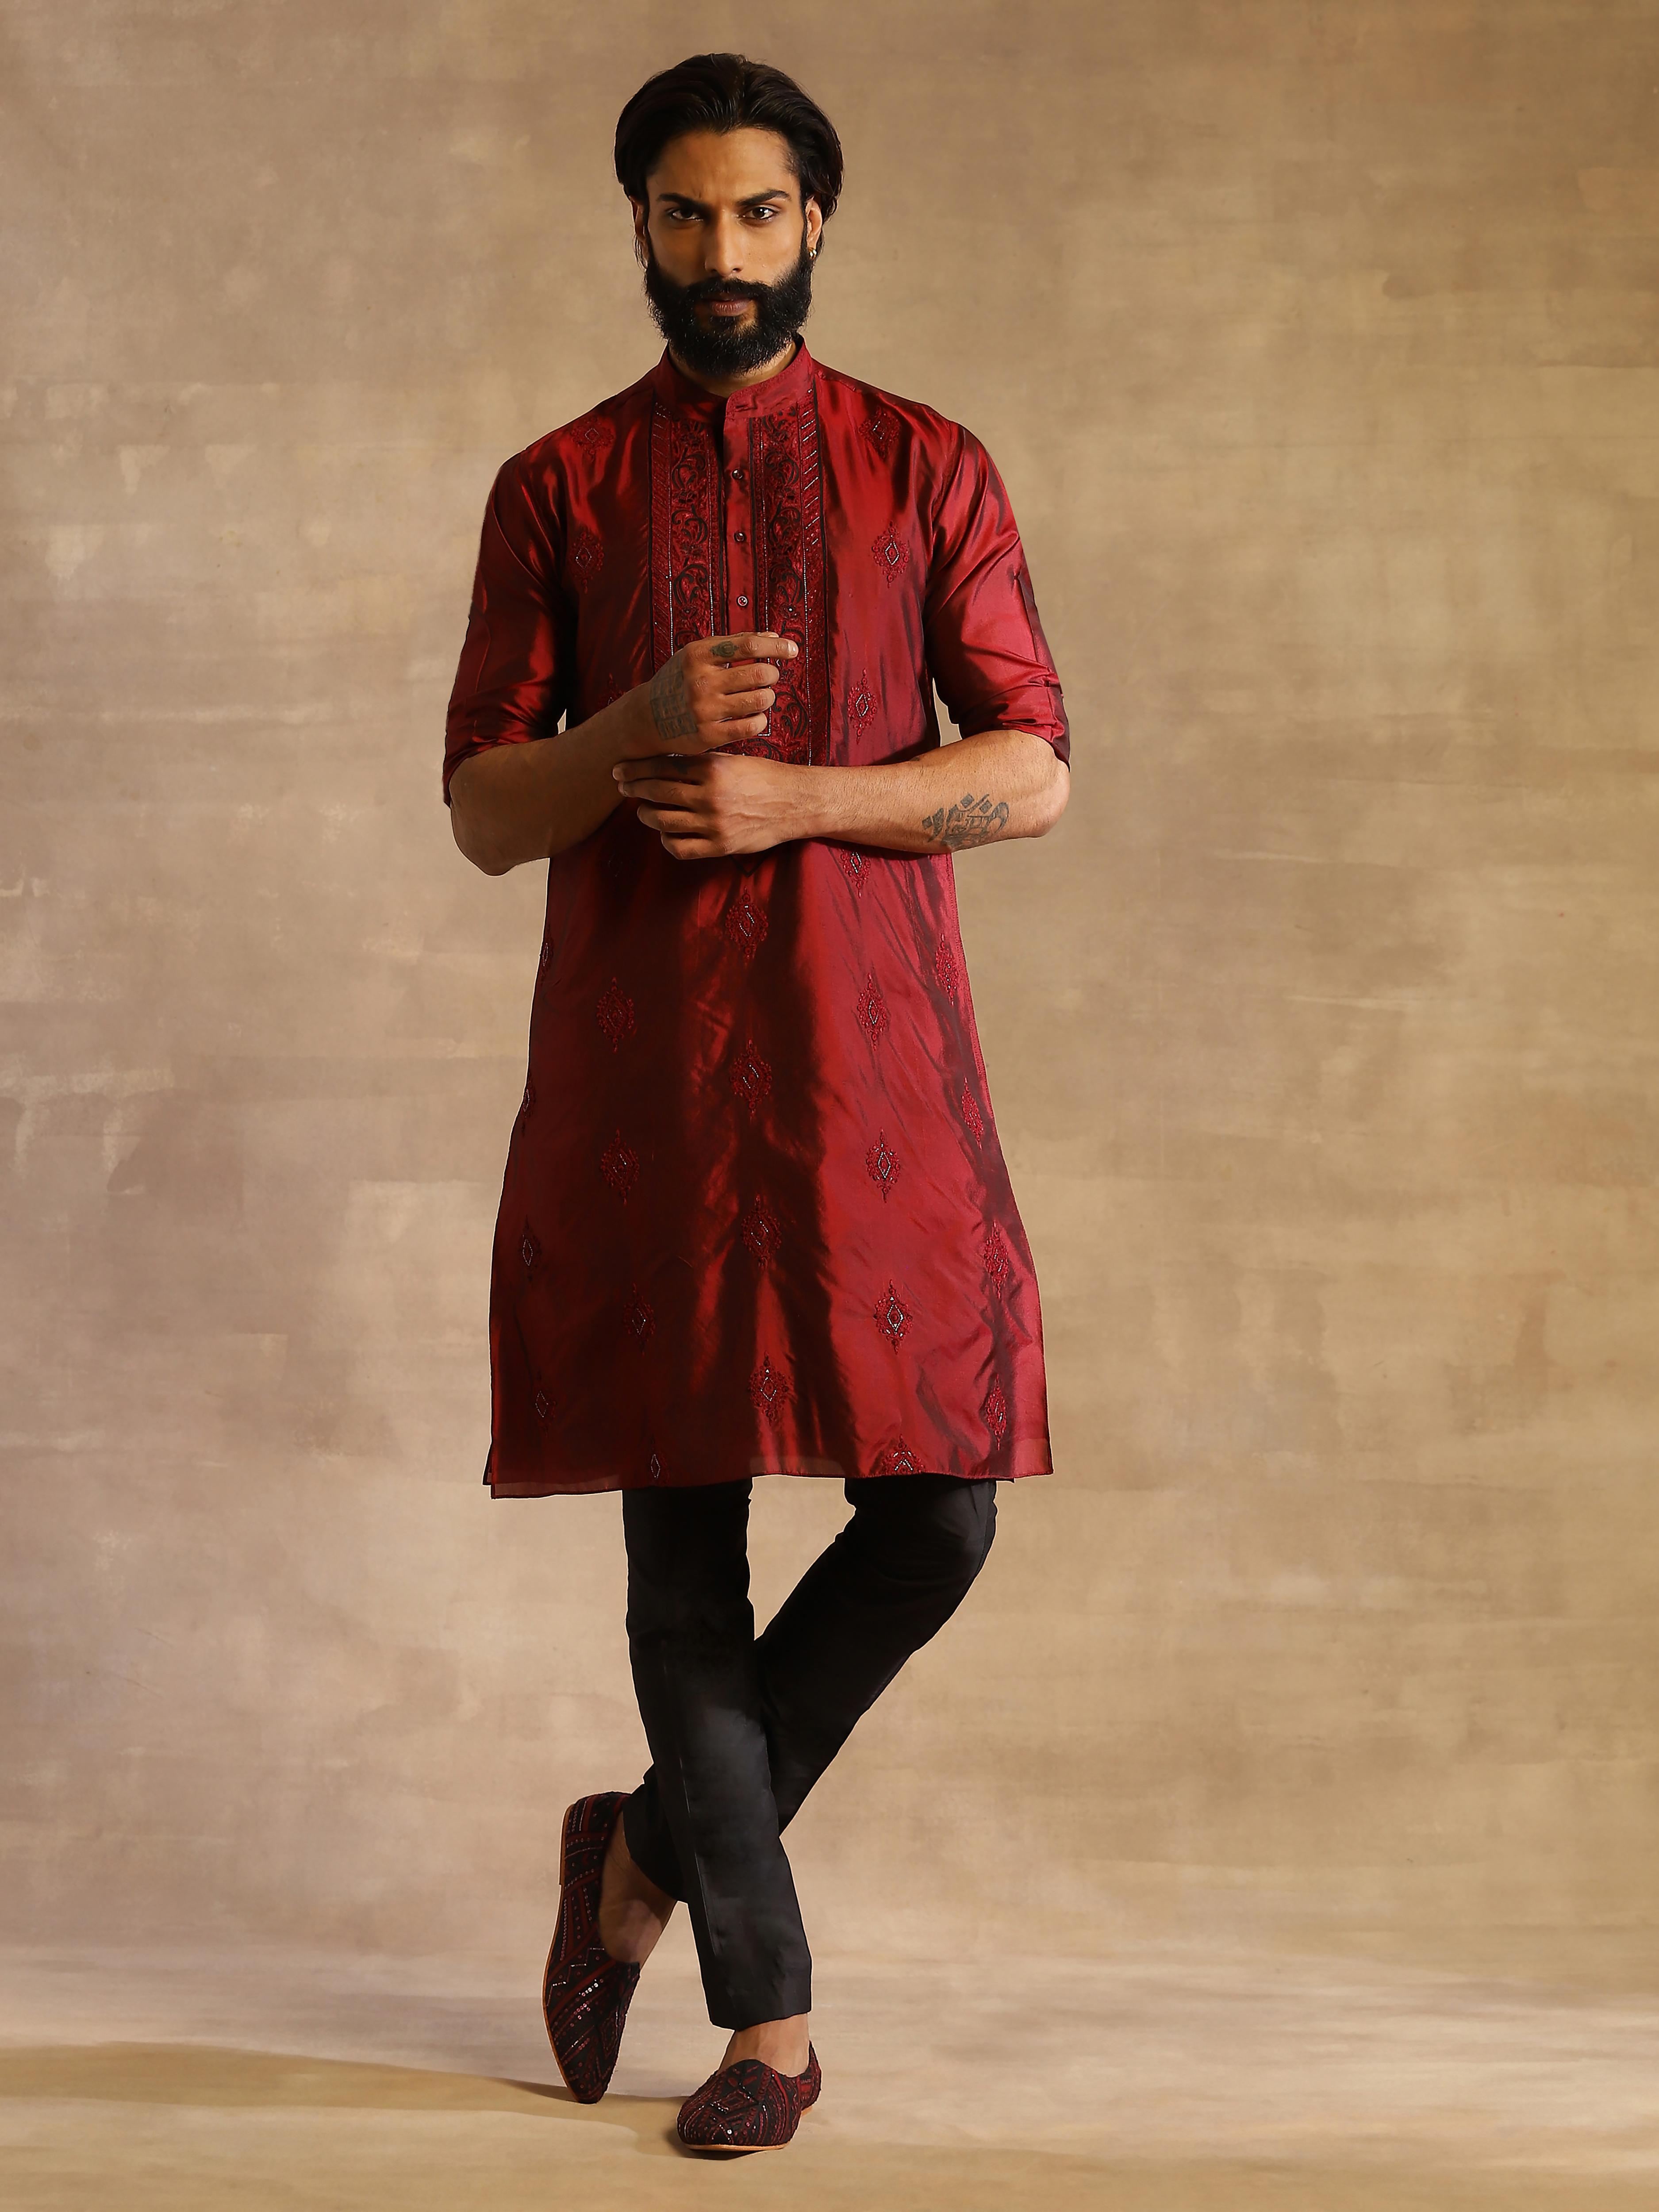 Indian Men Patchwork Kurta Casual Shirt Loose Fit Handkerchief Cotton Tunic  Red | eBay